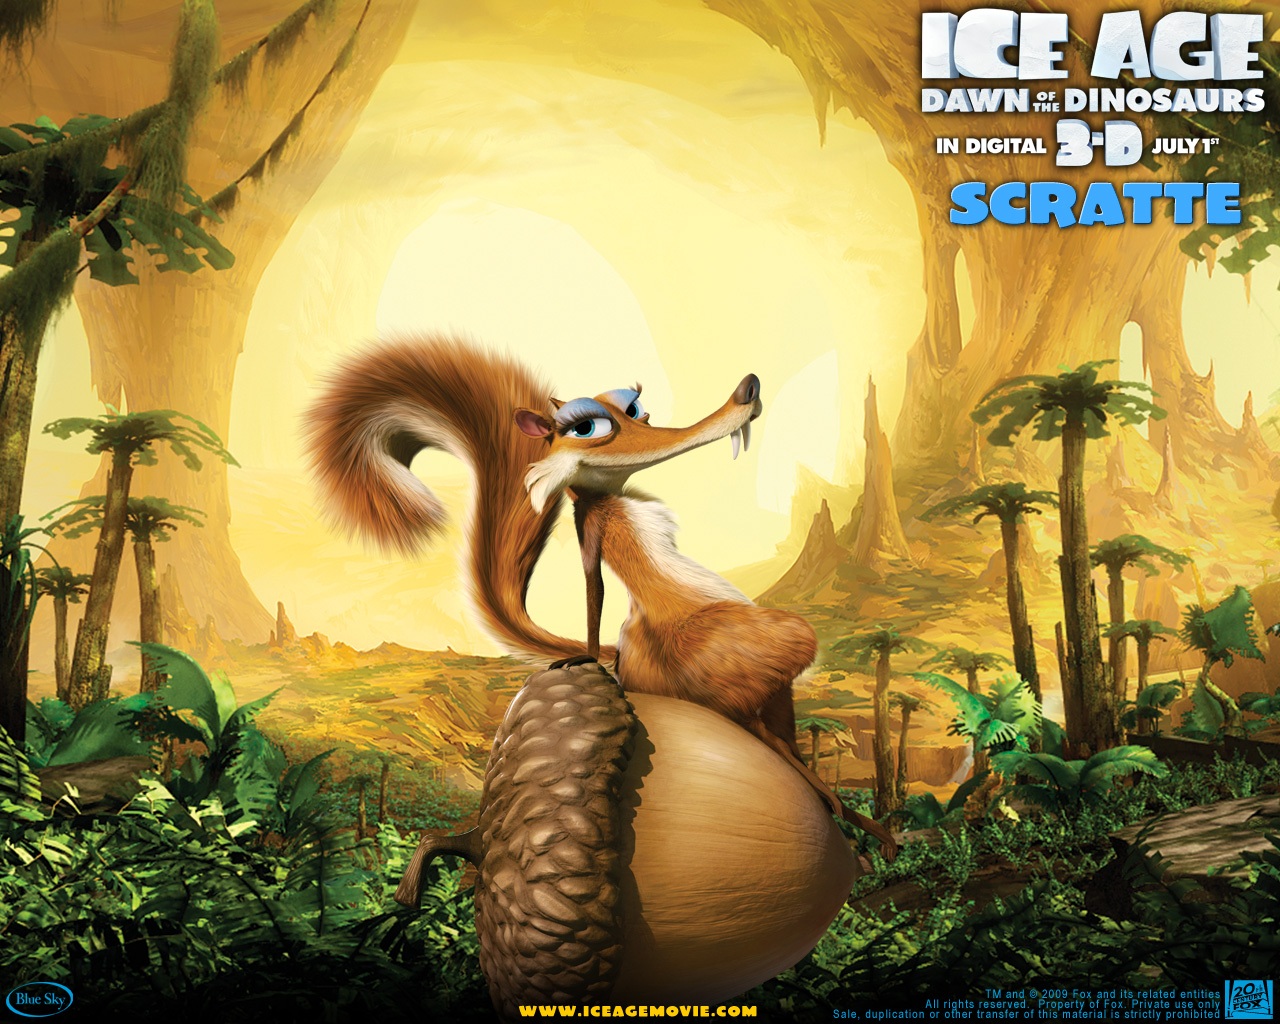 3d обои Ледниковый период 3, Ice age down of the dinosaurs in digital 3d july 1 SCRATTE Белка сидит на орехе  белки # 20891